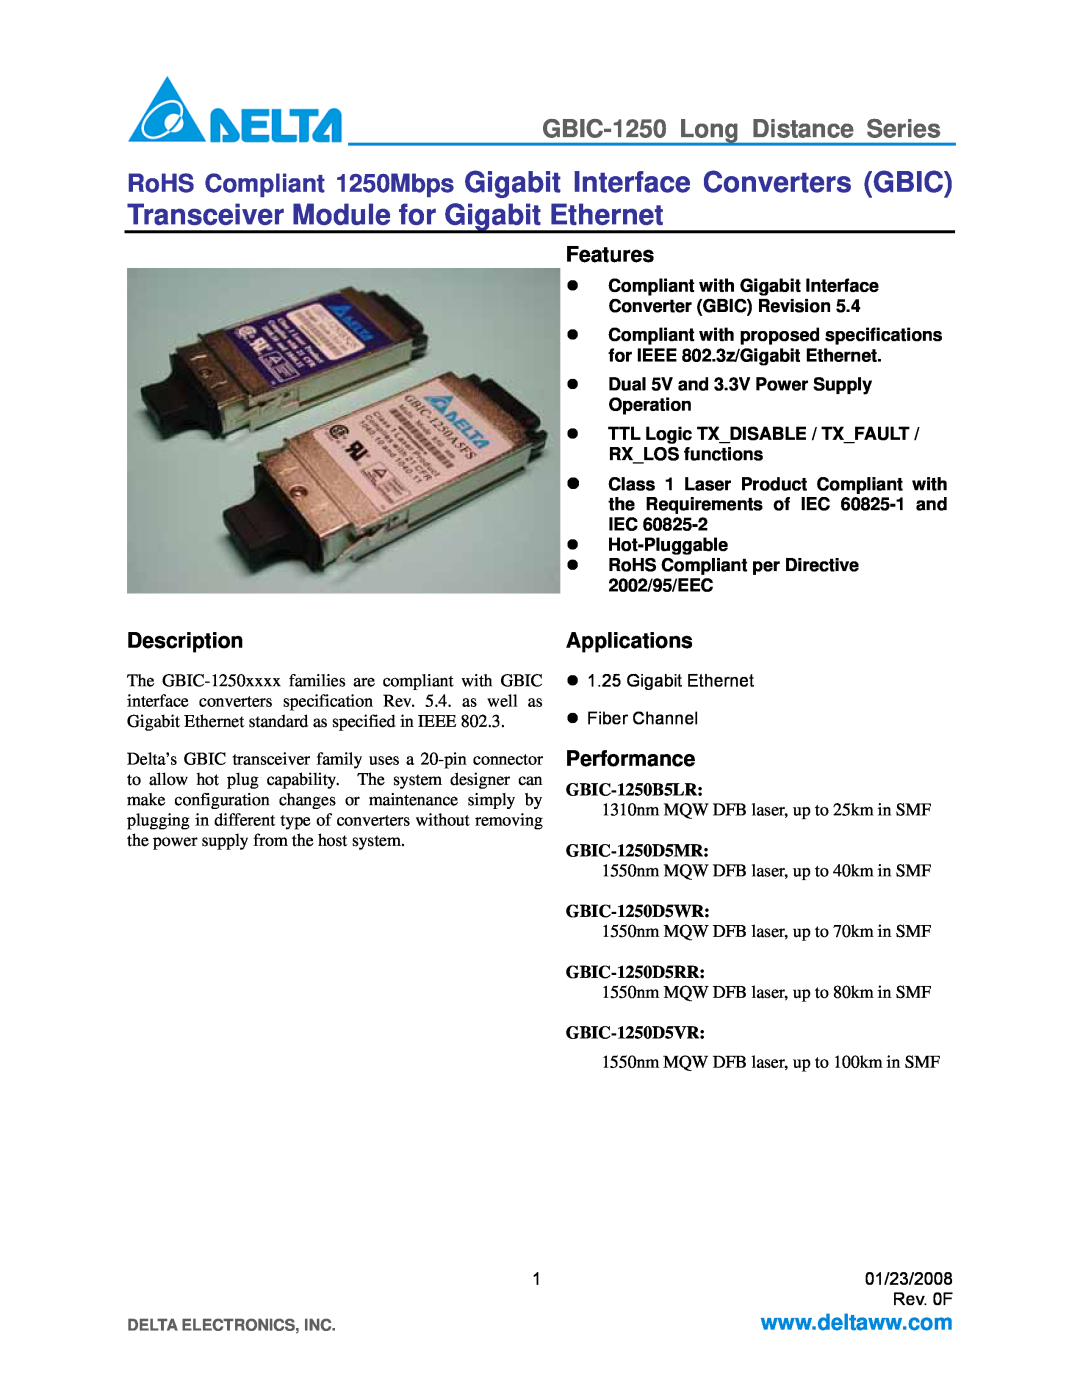 Delta Electronics GBIC-1250D5RR specifications GBIC-1250 Long Distance Series, Features, Description, Applications 